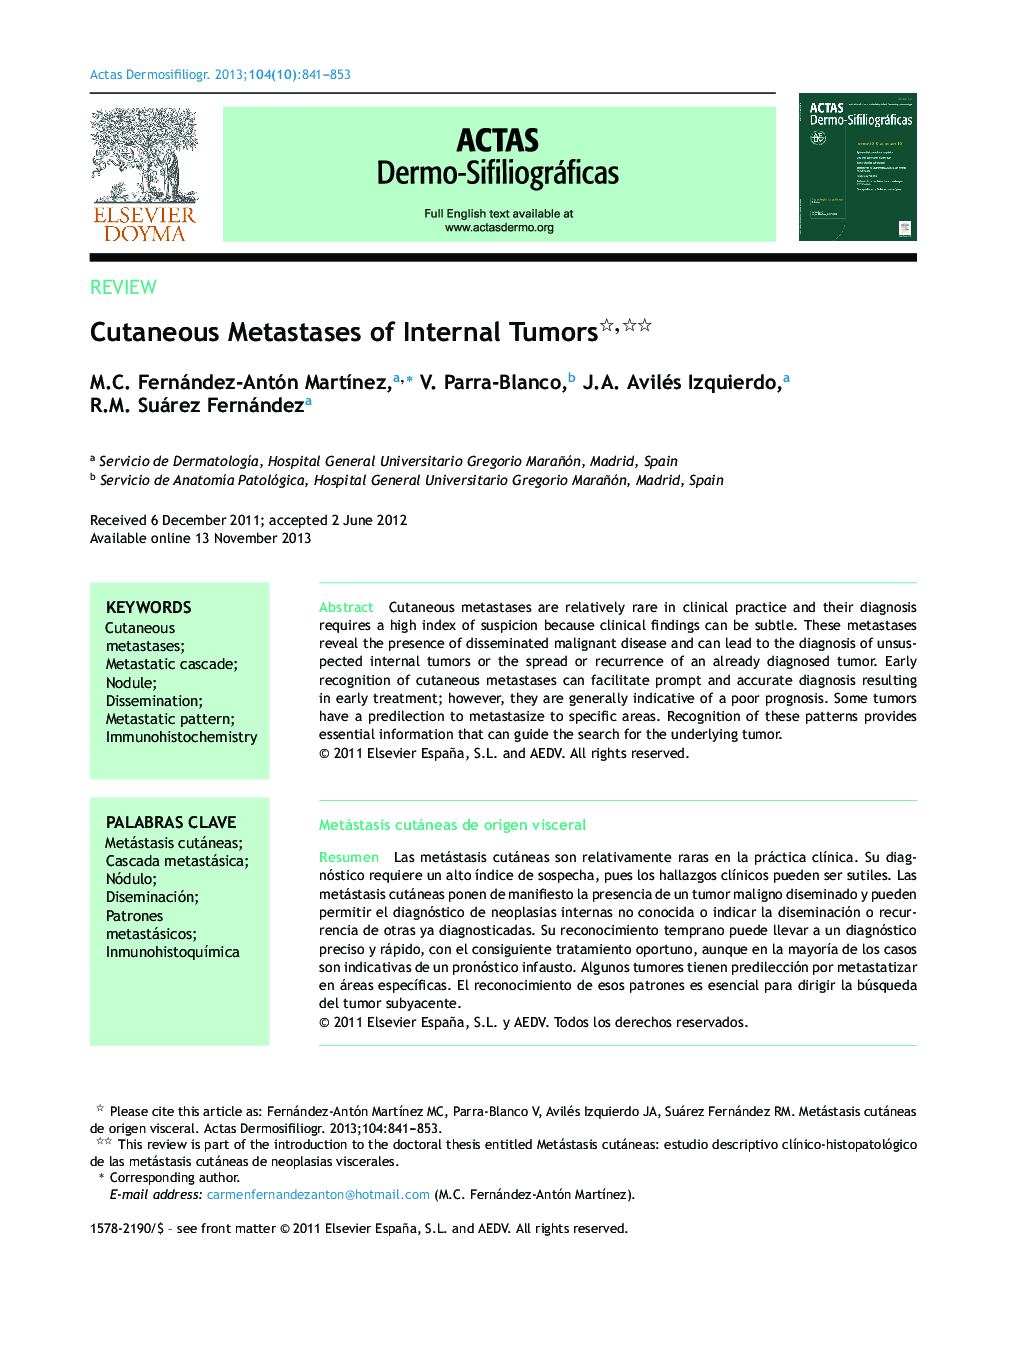 Cutaneous Metastases of Internal Tumors